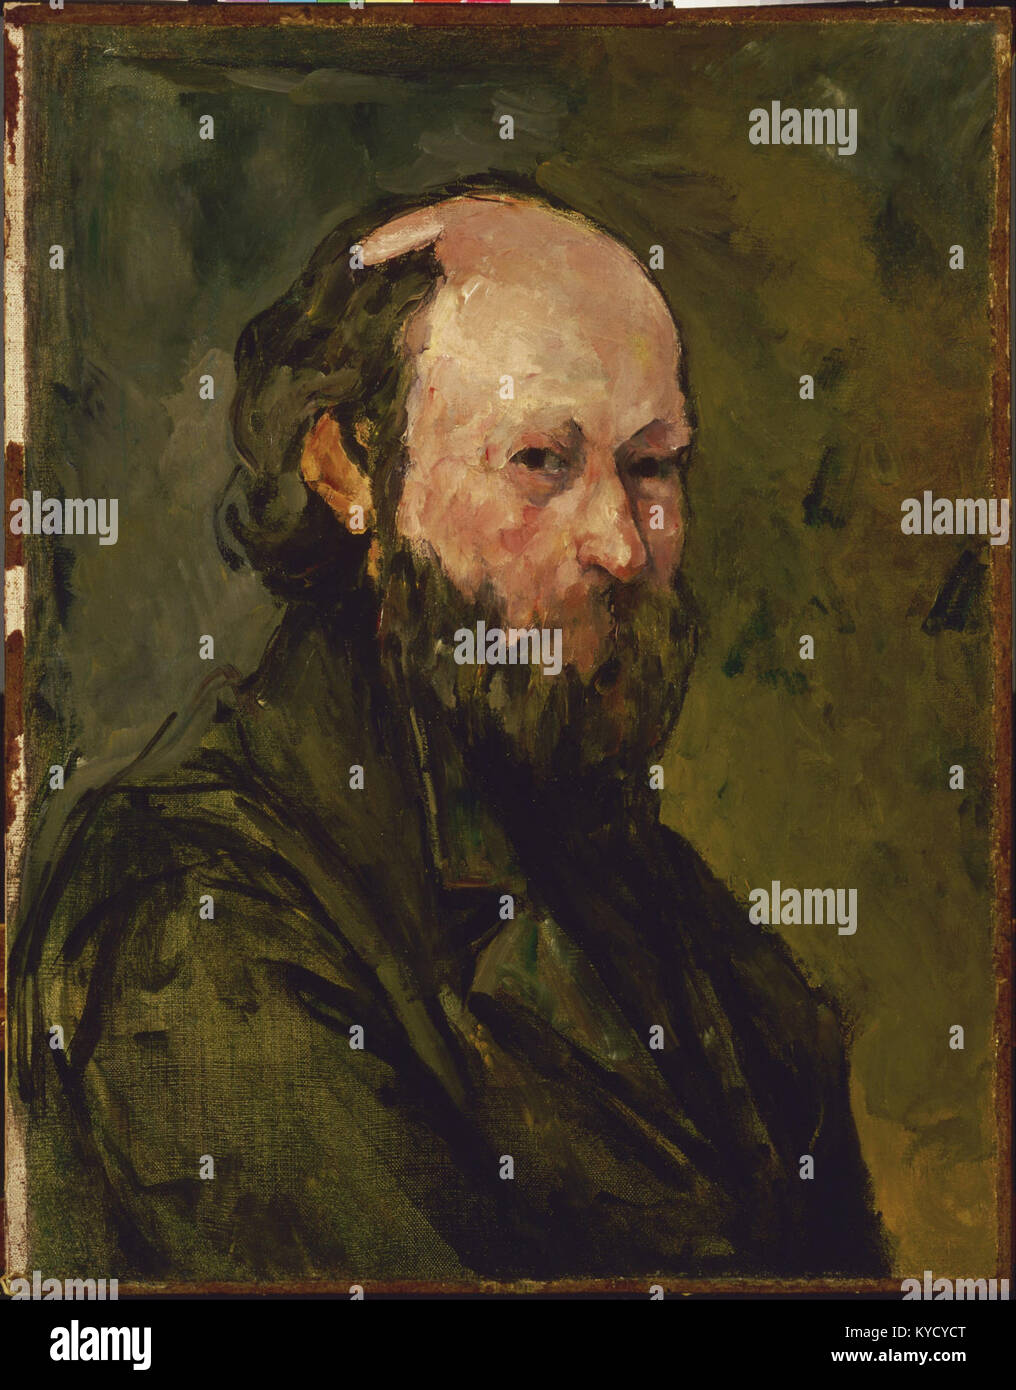 Paul Cézanne - Self-Portrait - Google Art Project Stock Photo